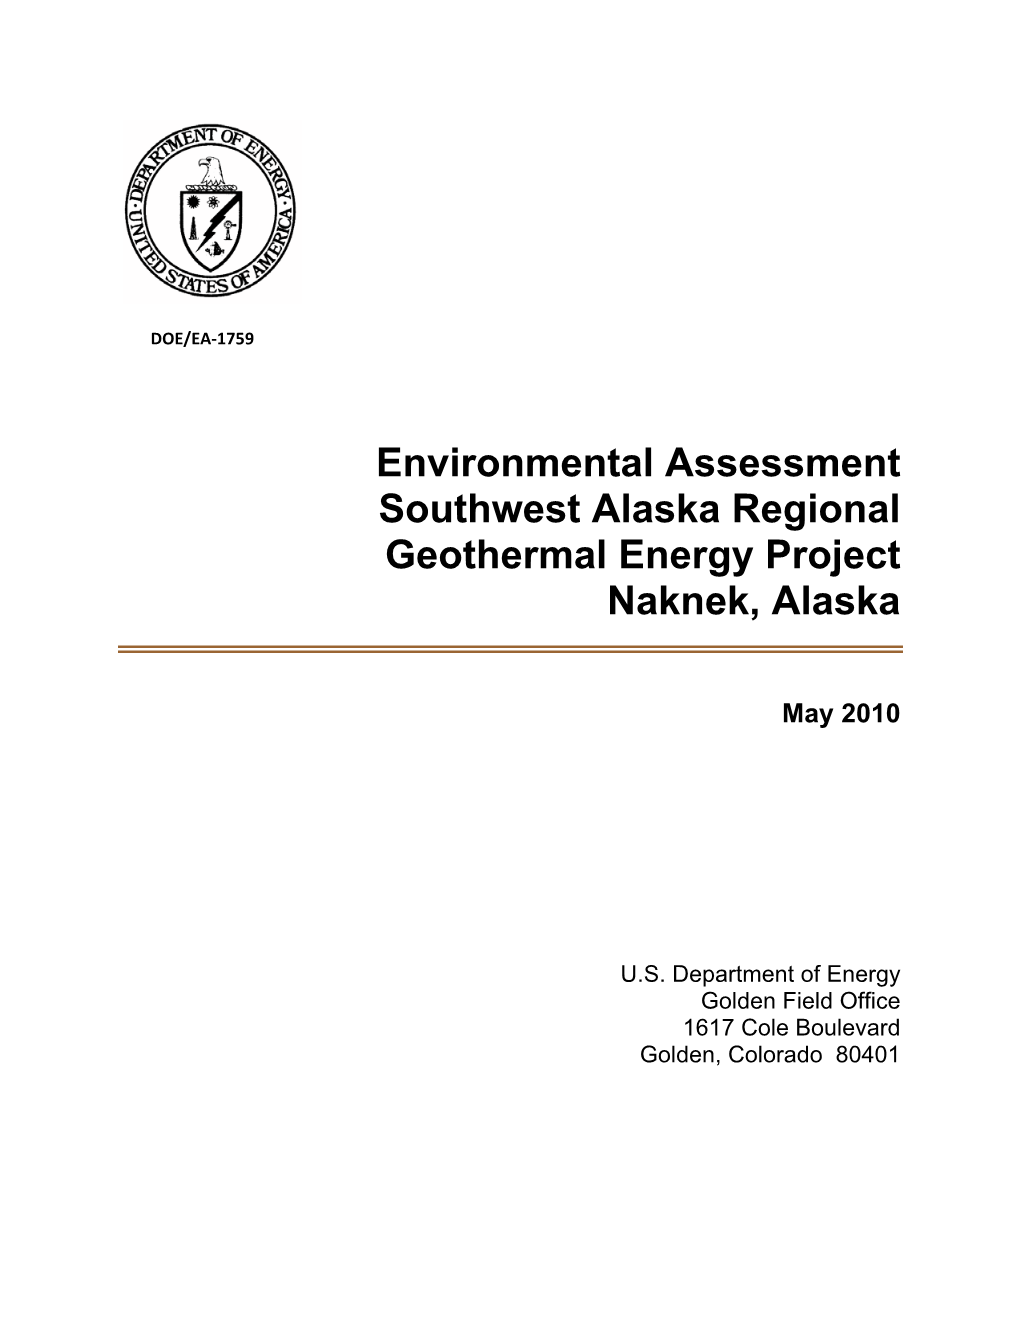 Environmental Assessment Southwest Alaska Regional Geothermal Energy Project Naknek, Alaska